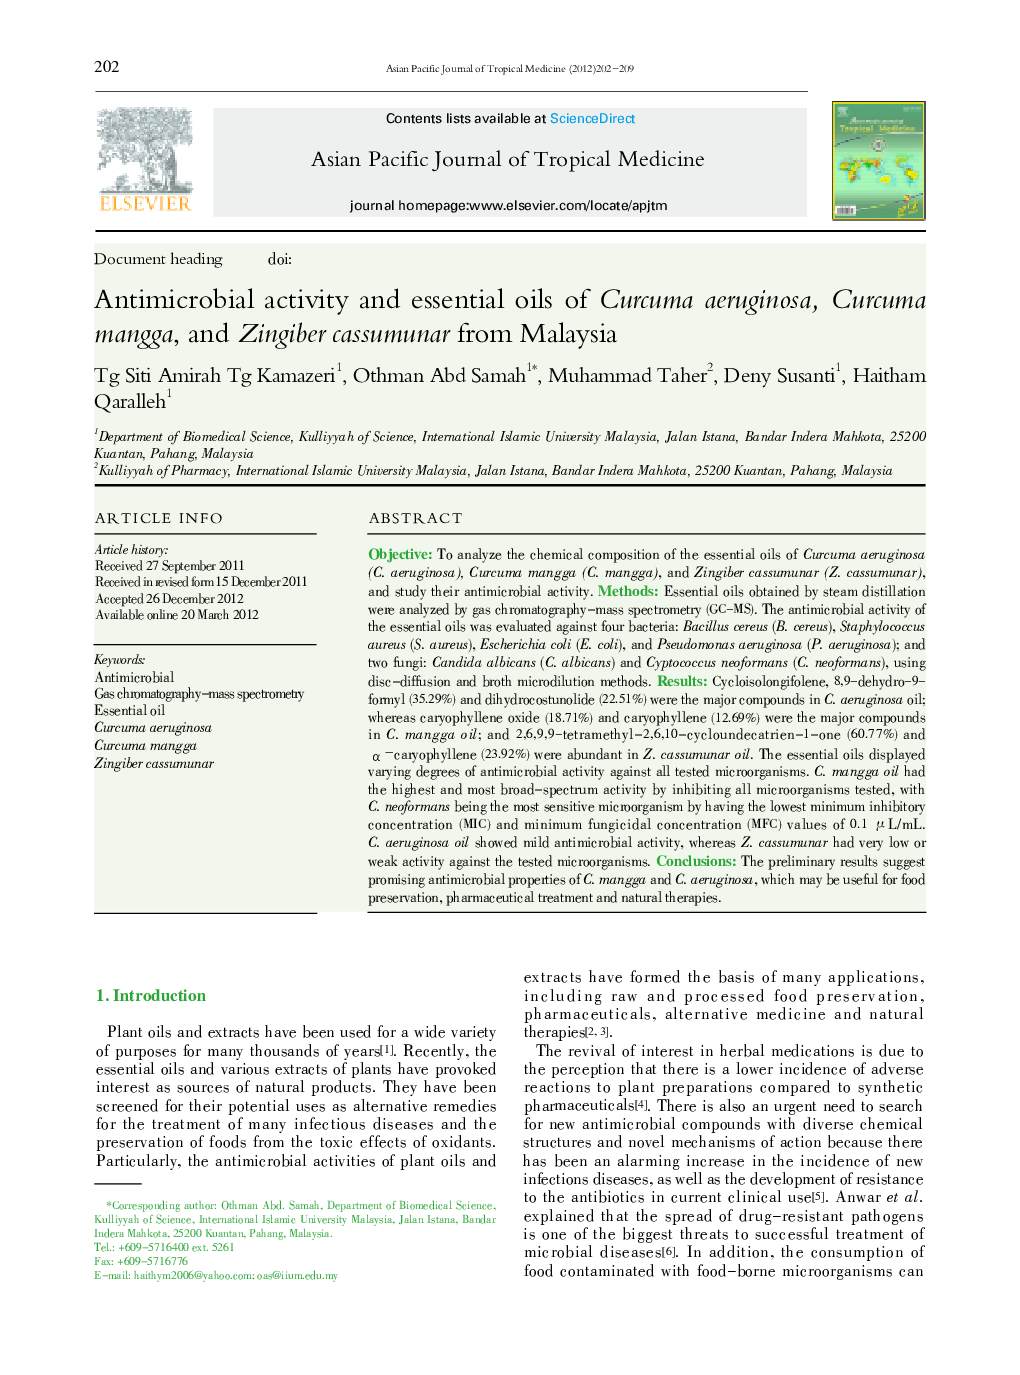 Antimicrobial activity and essential oils of Curcuma aeruginosa, Curcuma mangga, and Zingiber cassumunar from Malaysia 